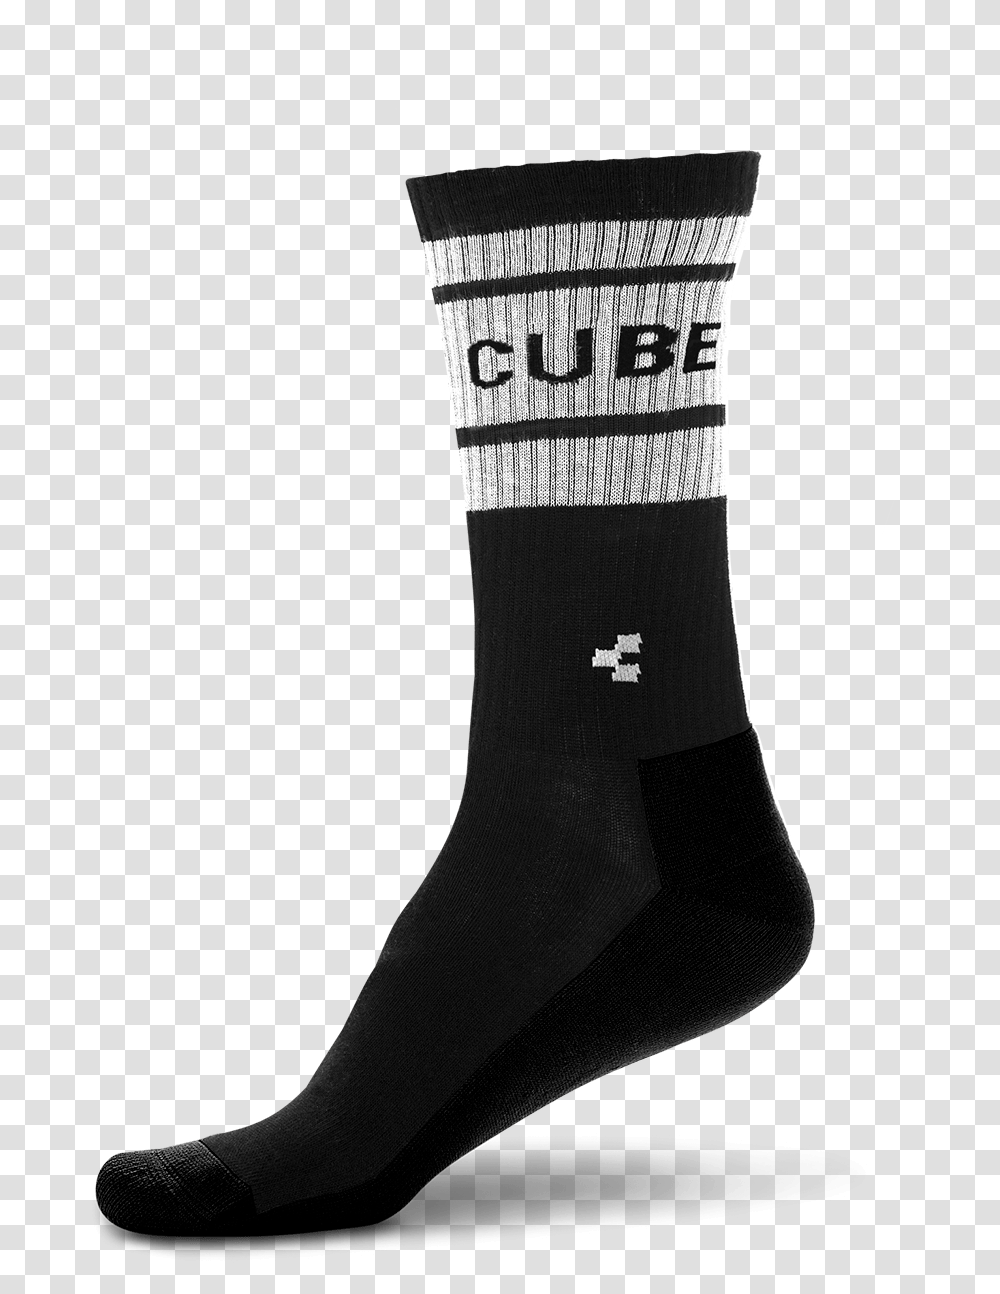 Sock Clipart Download Sock, Apparel, Shoe, Footwear Transparent Png